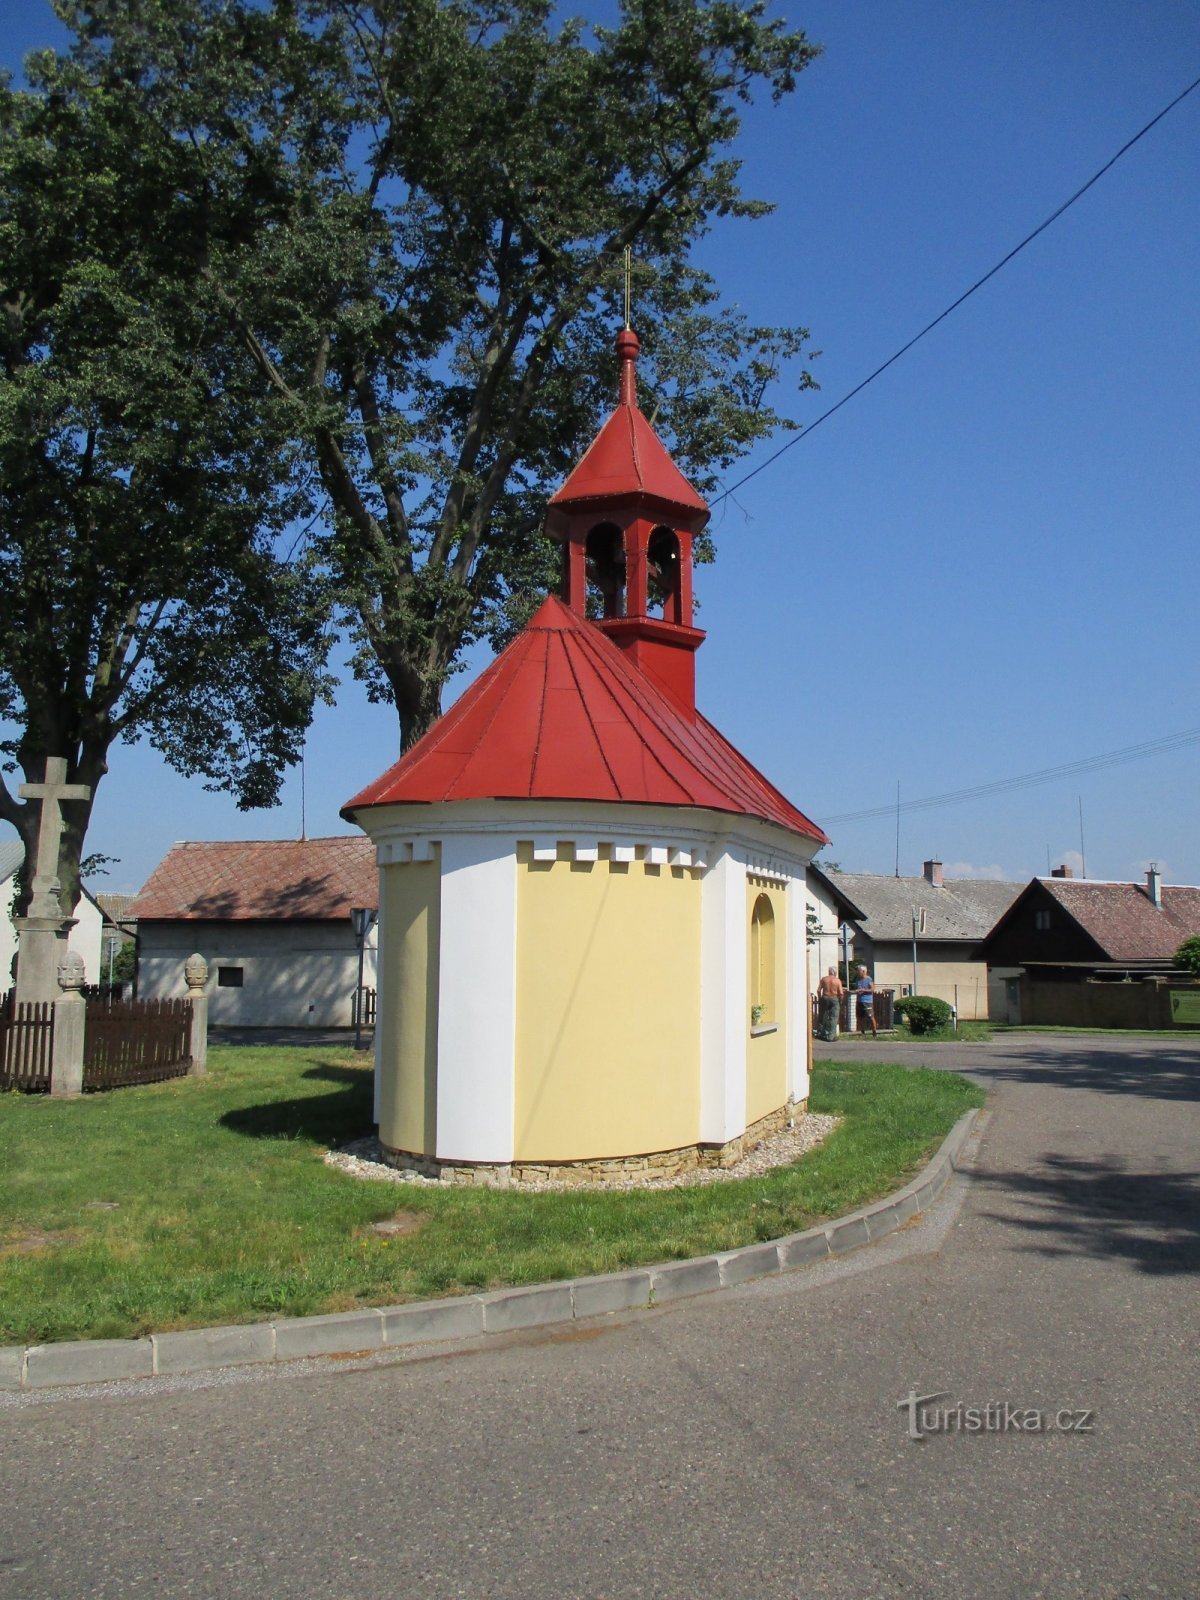 Chapel of St. Ludmily (Městec, 19.6.2019/XNUMX/XNUMX)